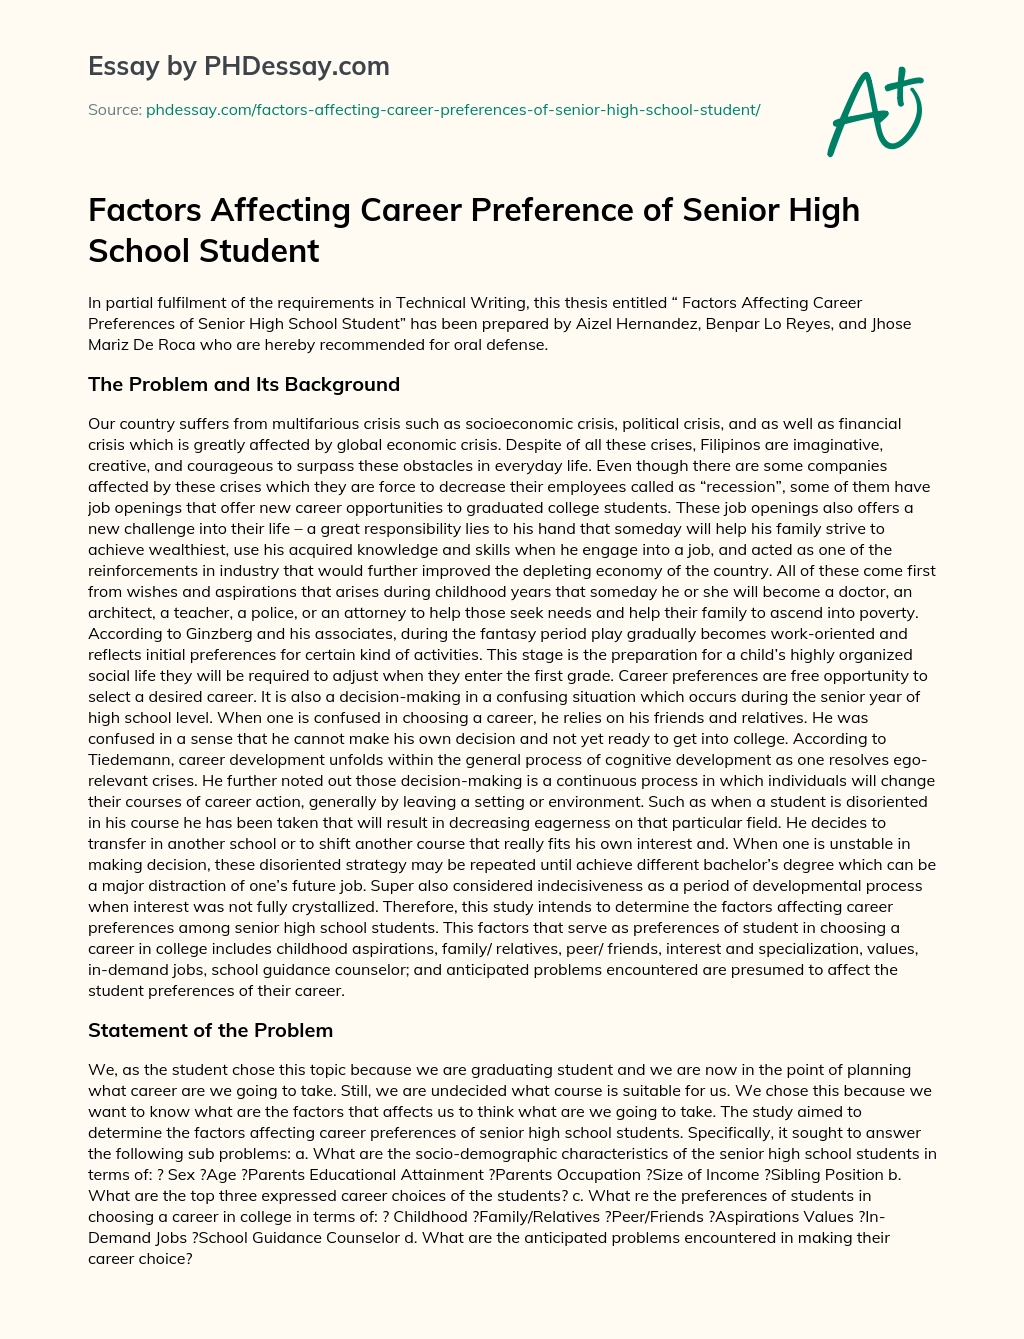 Factors Affecting Career Preference of Filipino Senior High School Student essay